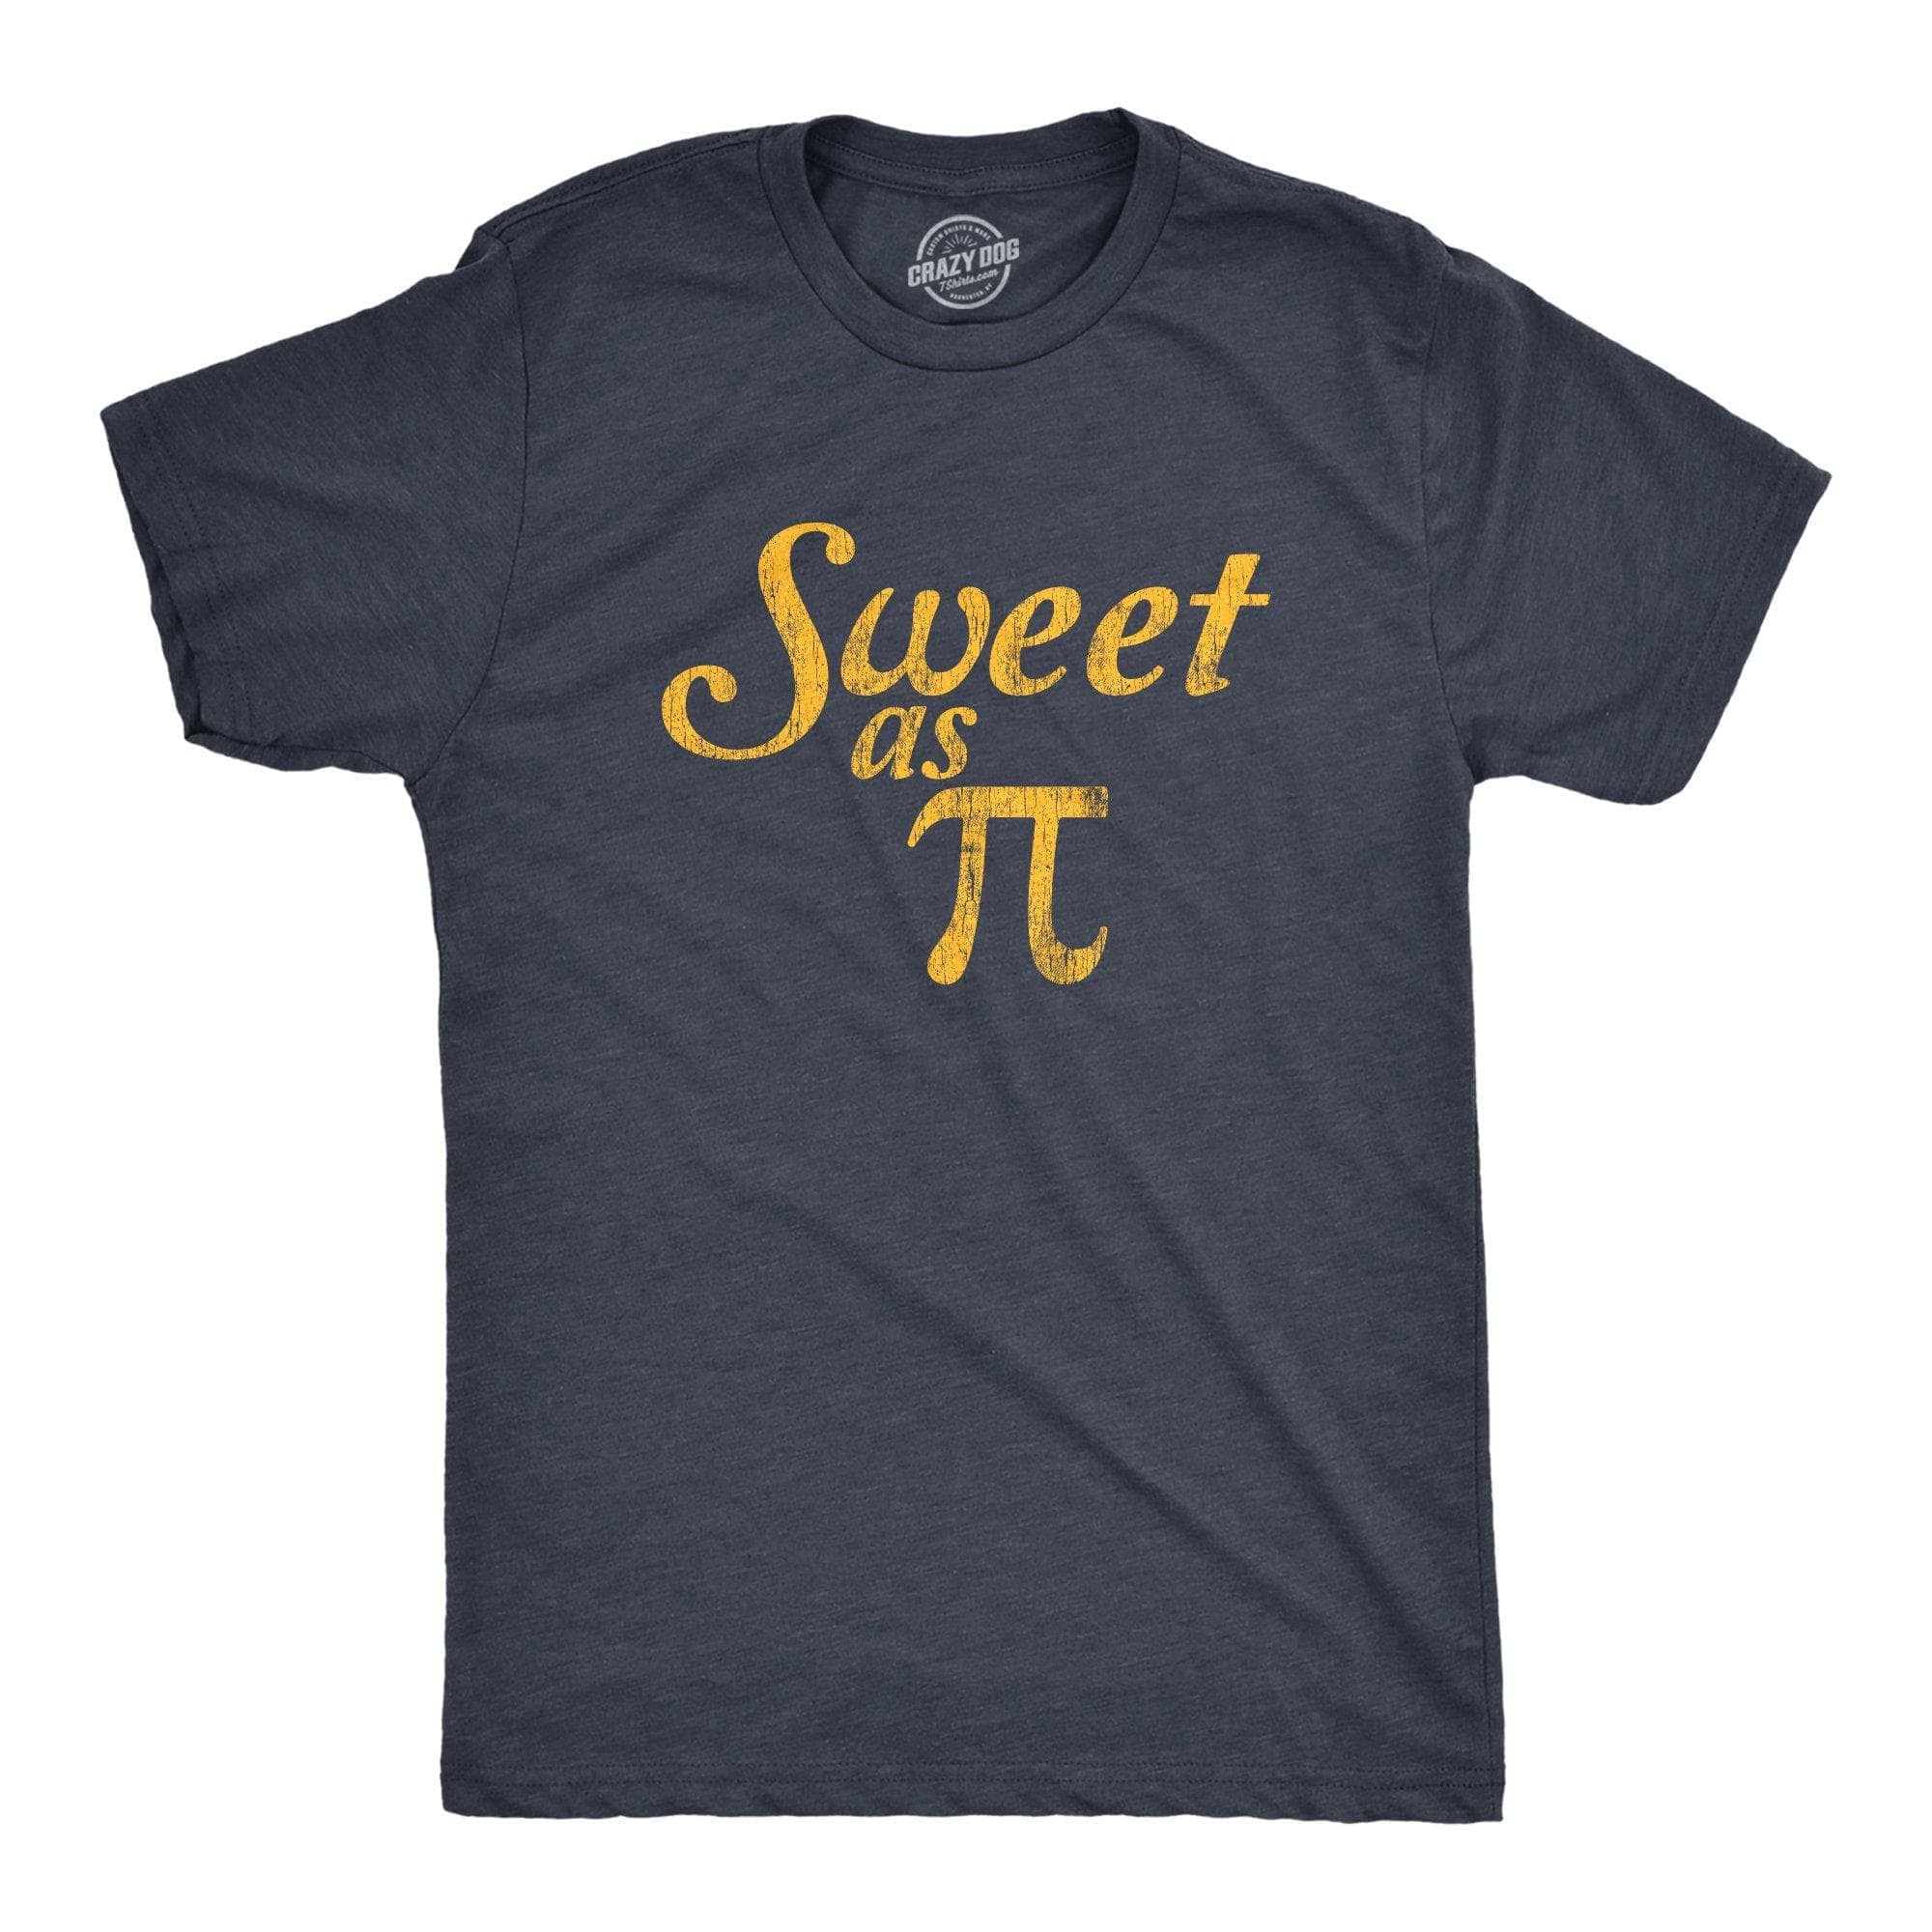 Sweet As Pi Men's Tshirt - Crazy Dog T-Shirts